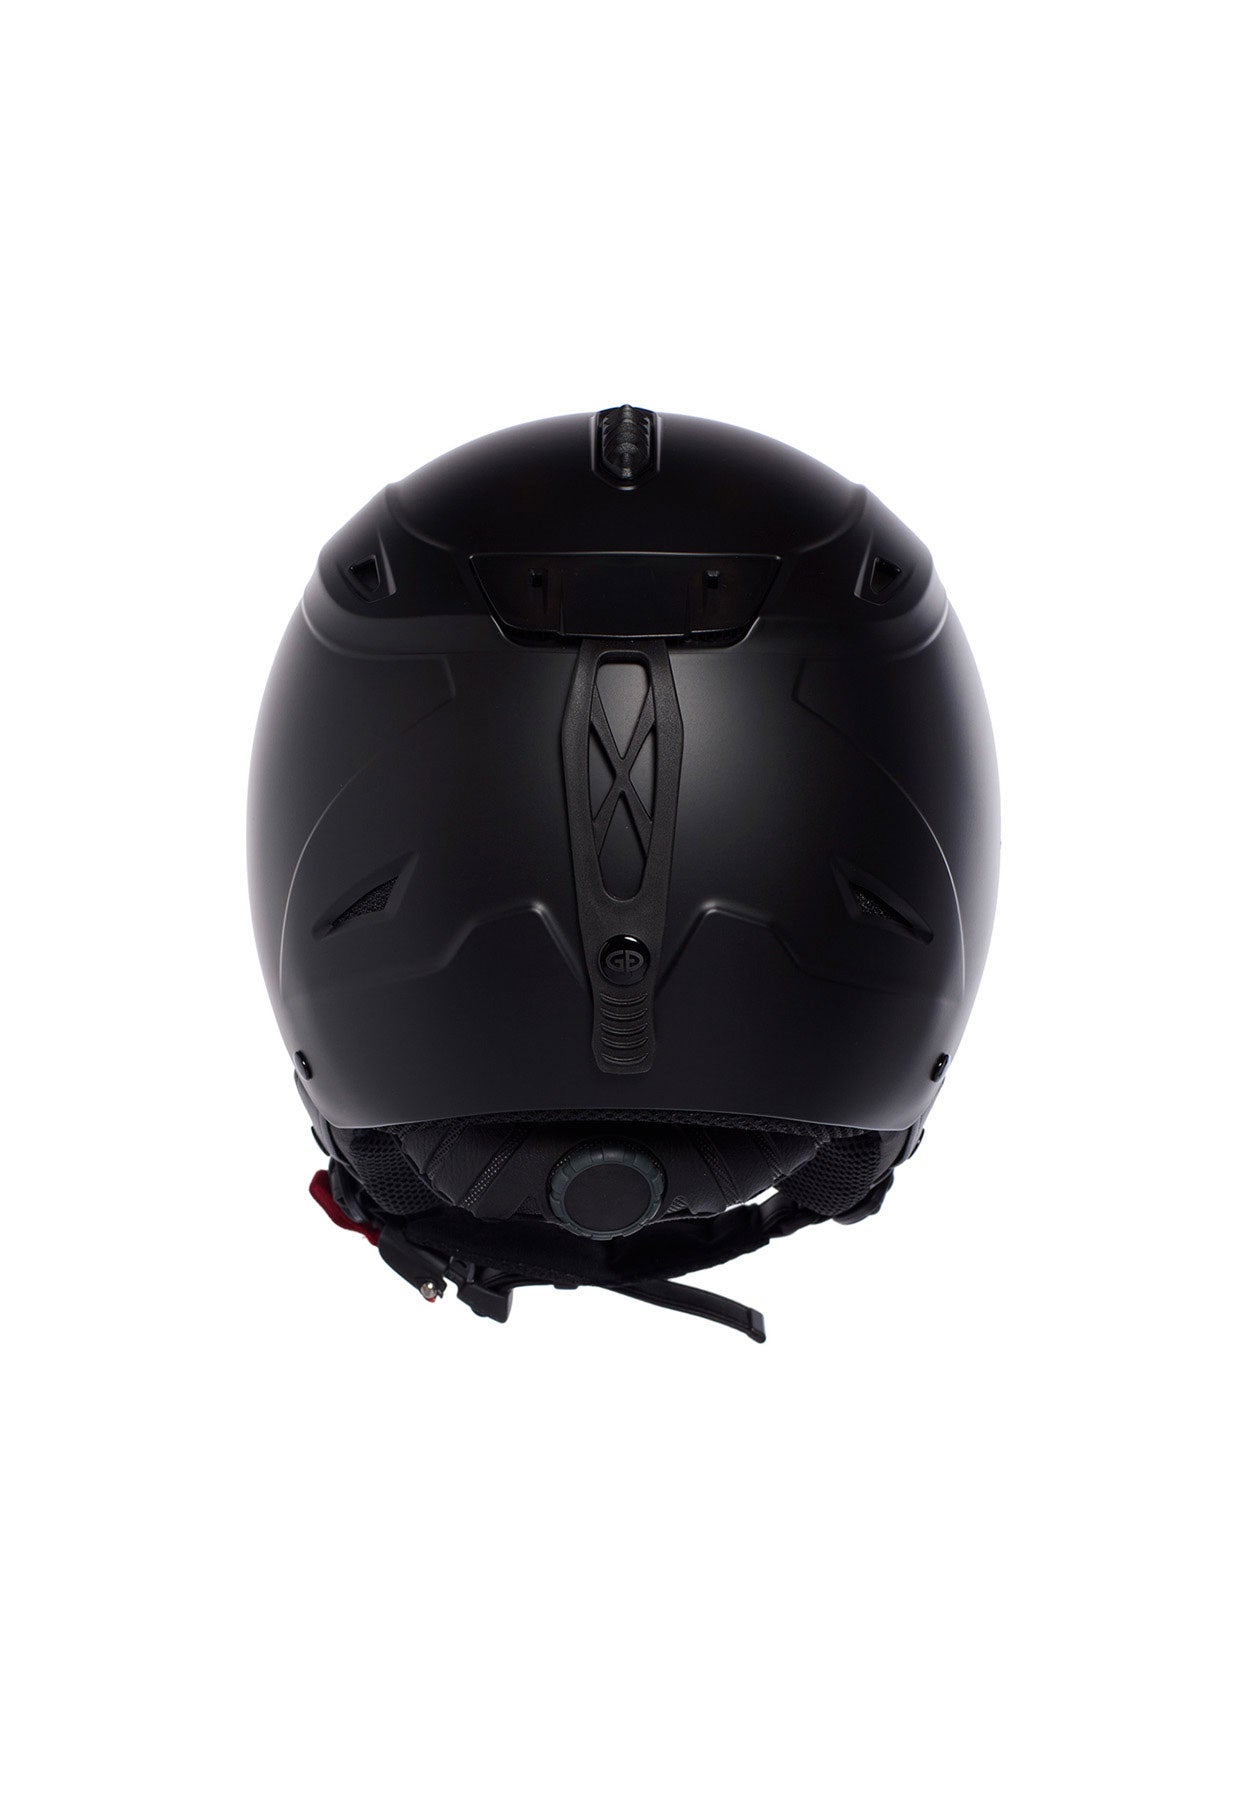 Goldbergh Khloe Ski Helmet in Black